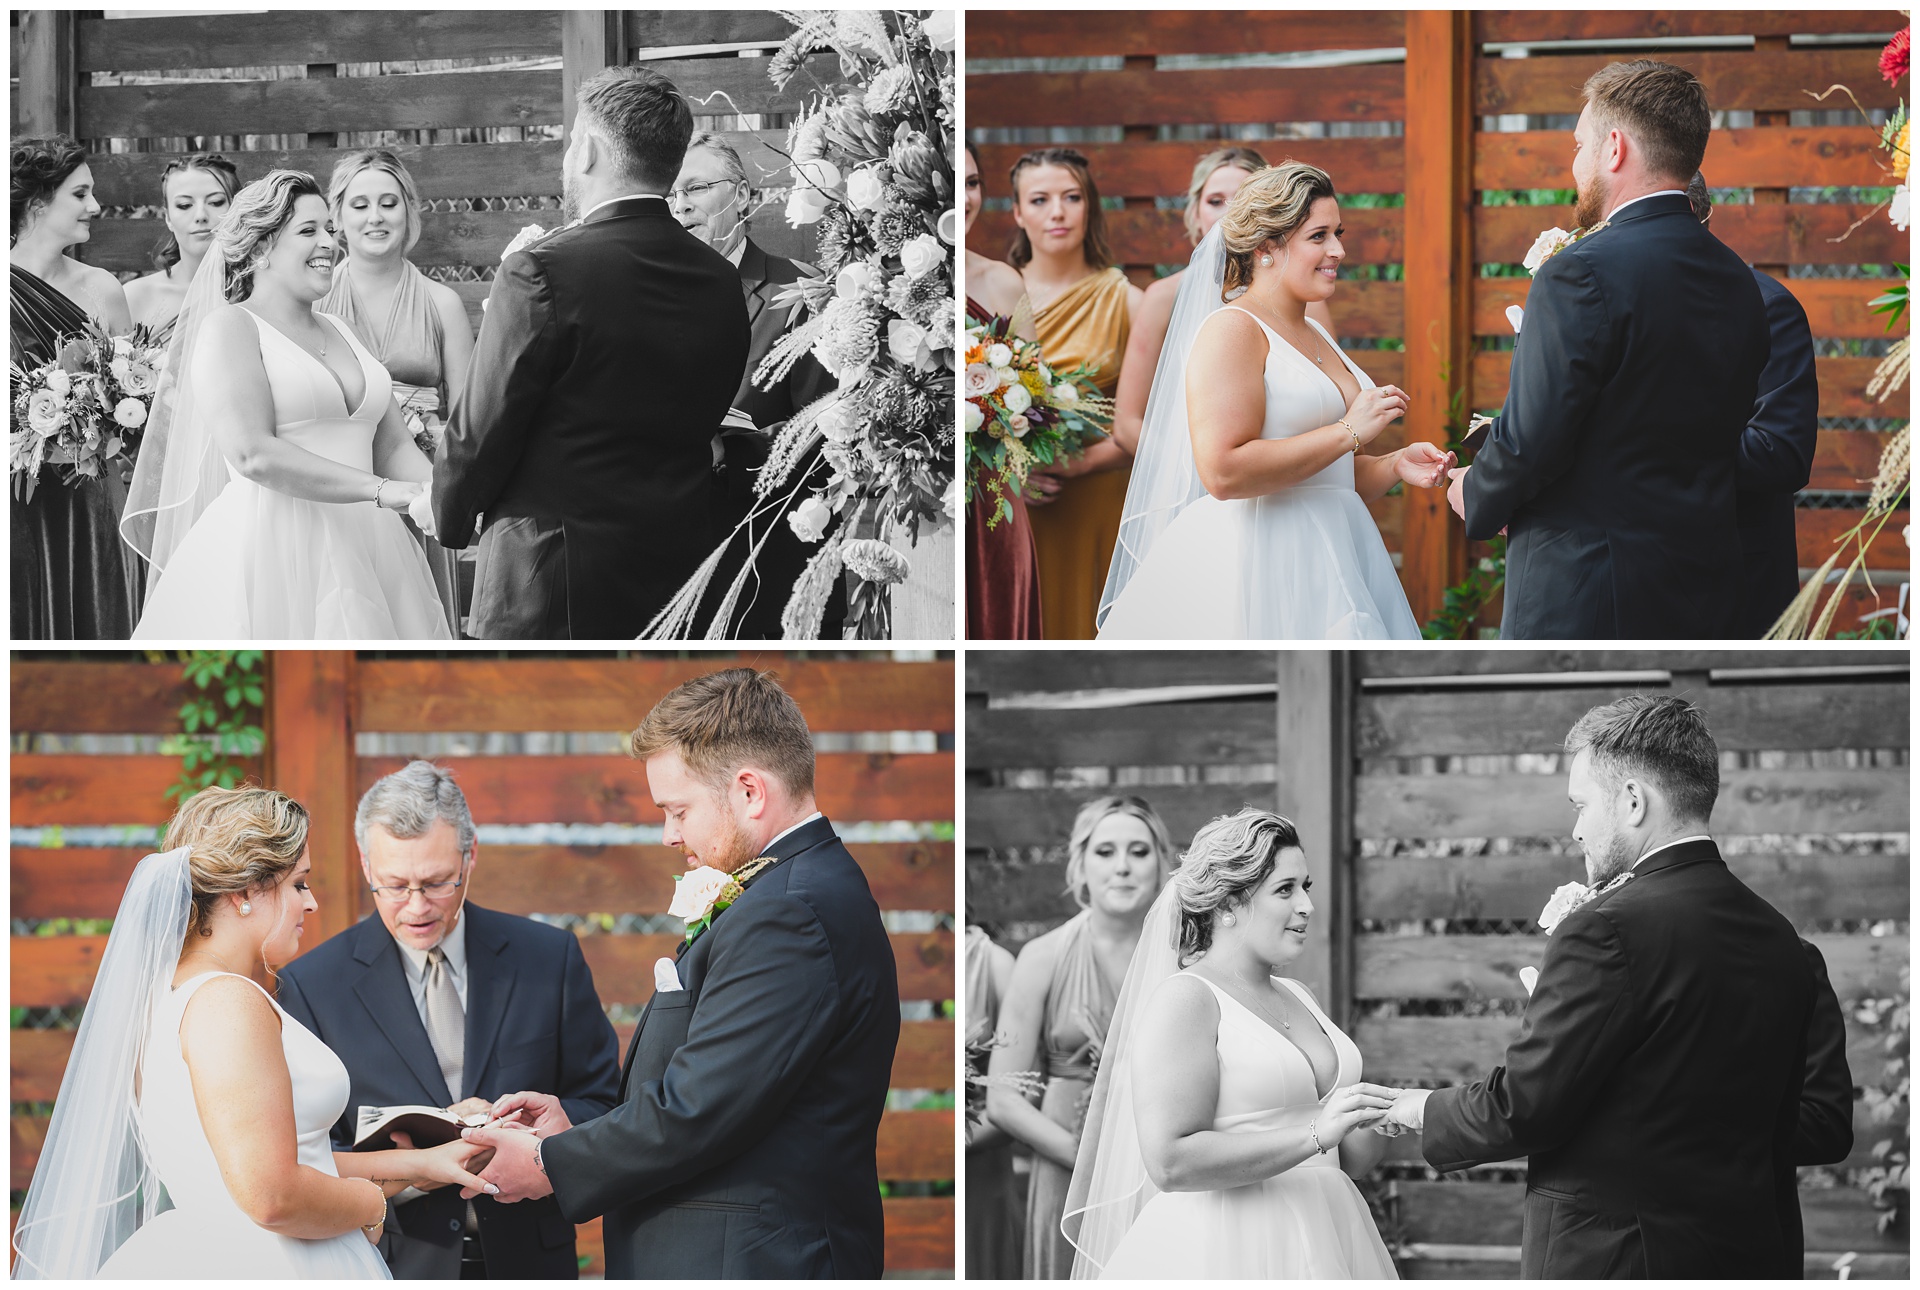 Wedding photography at The Magnolia Brookside by Kansas City wedding photographers Wisdom-Watson Weddings.